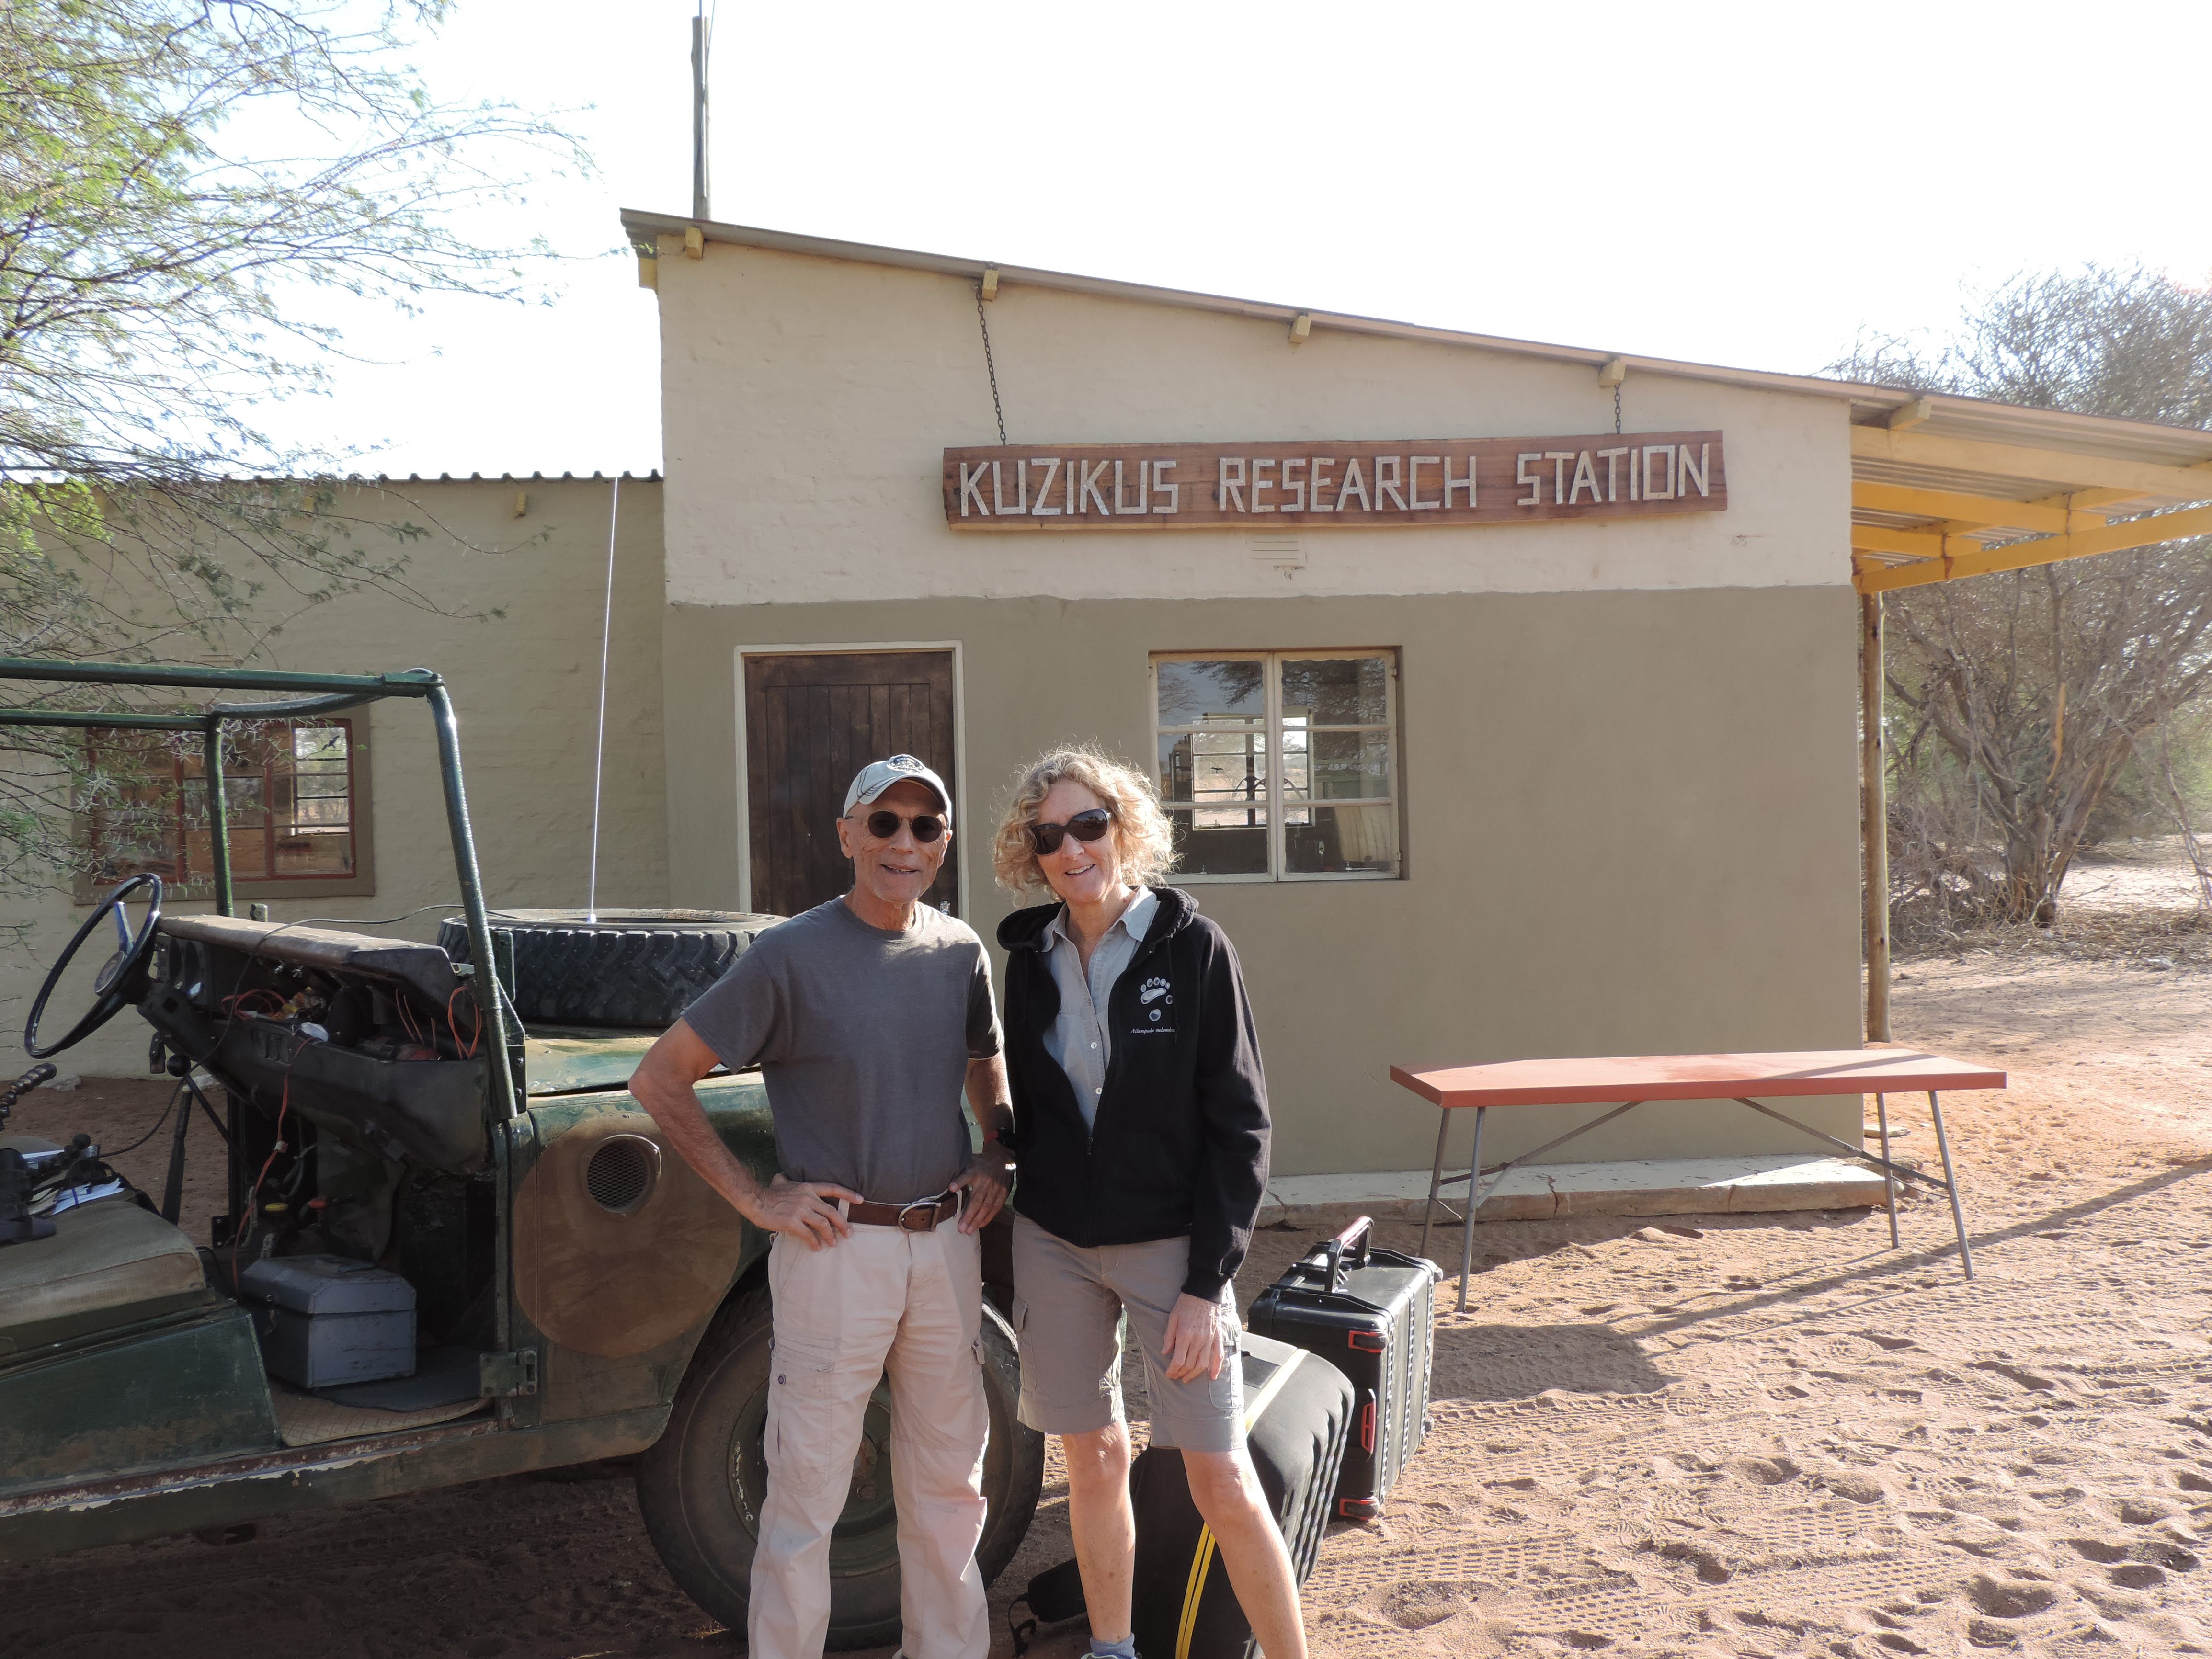 Zoe & Sky at Kuzikus Research Station, Namibia.